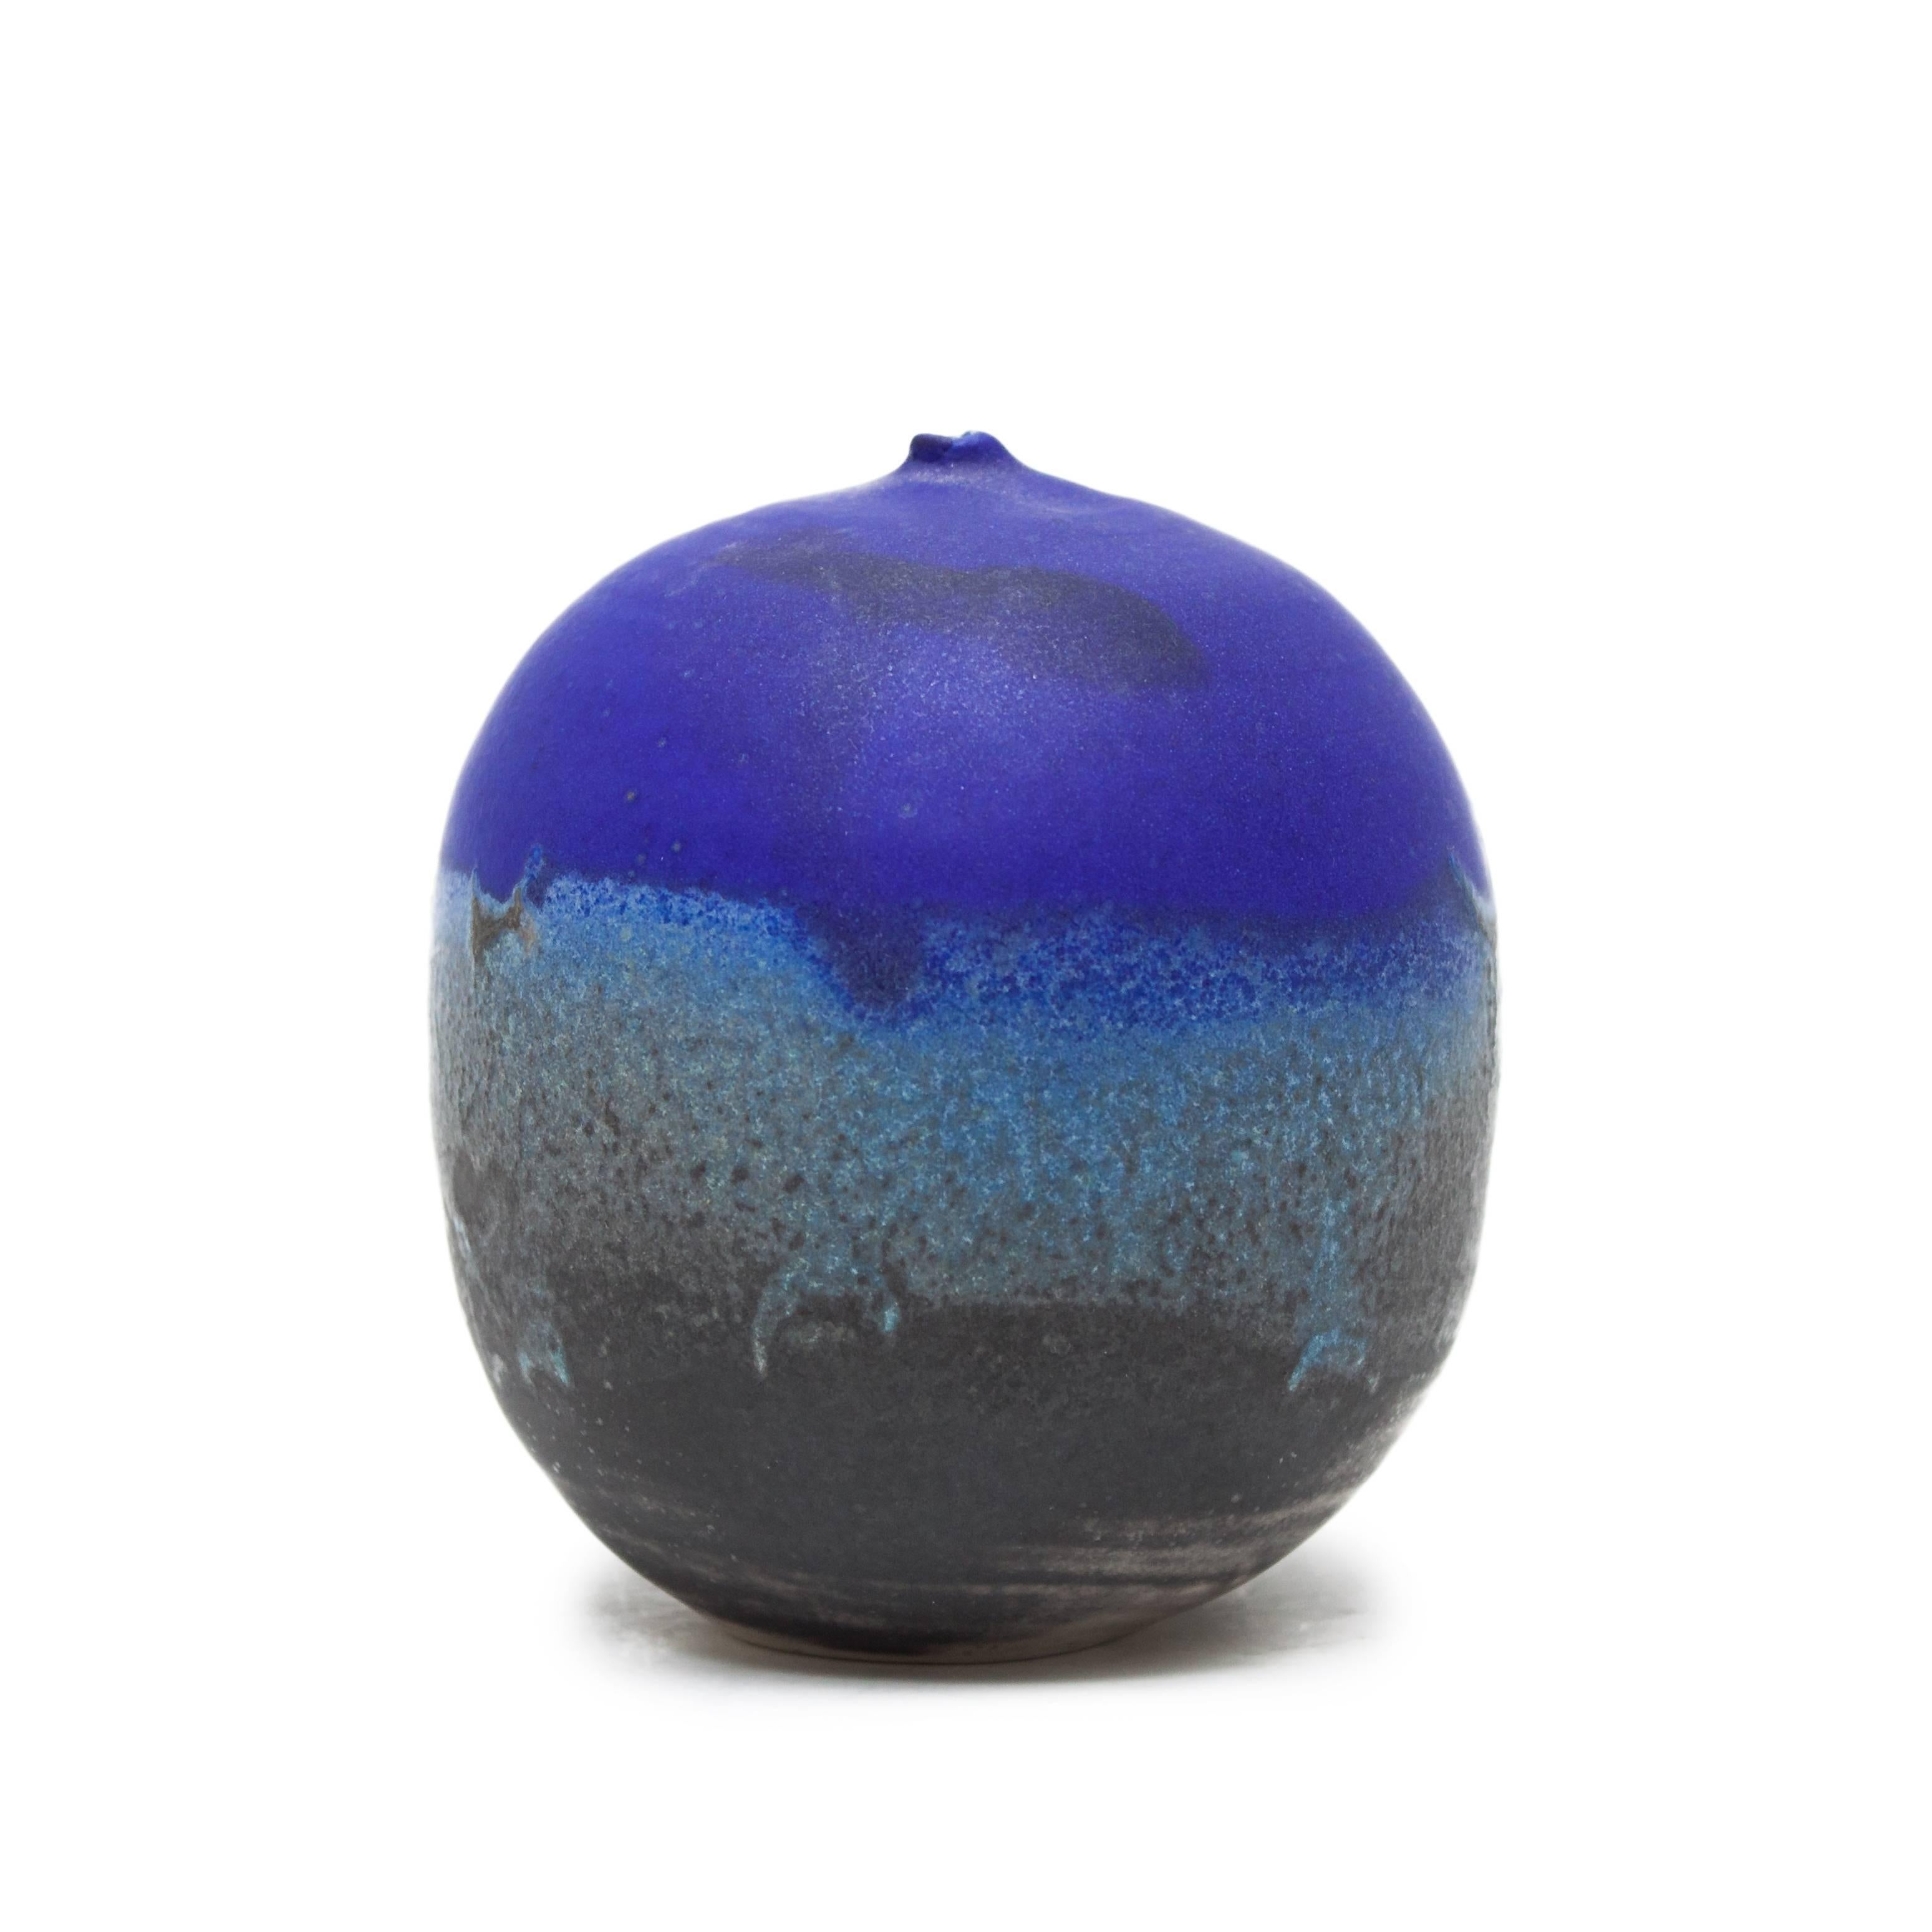 Cobalt Blue Moon Pot with Rattles - Sculpture by Toshiko Takaezu